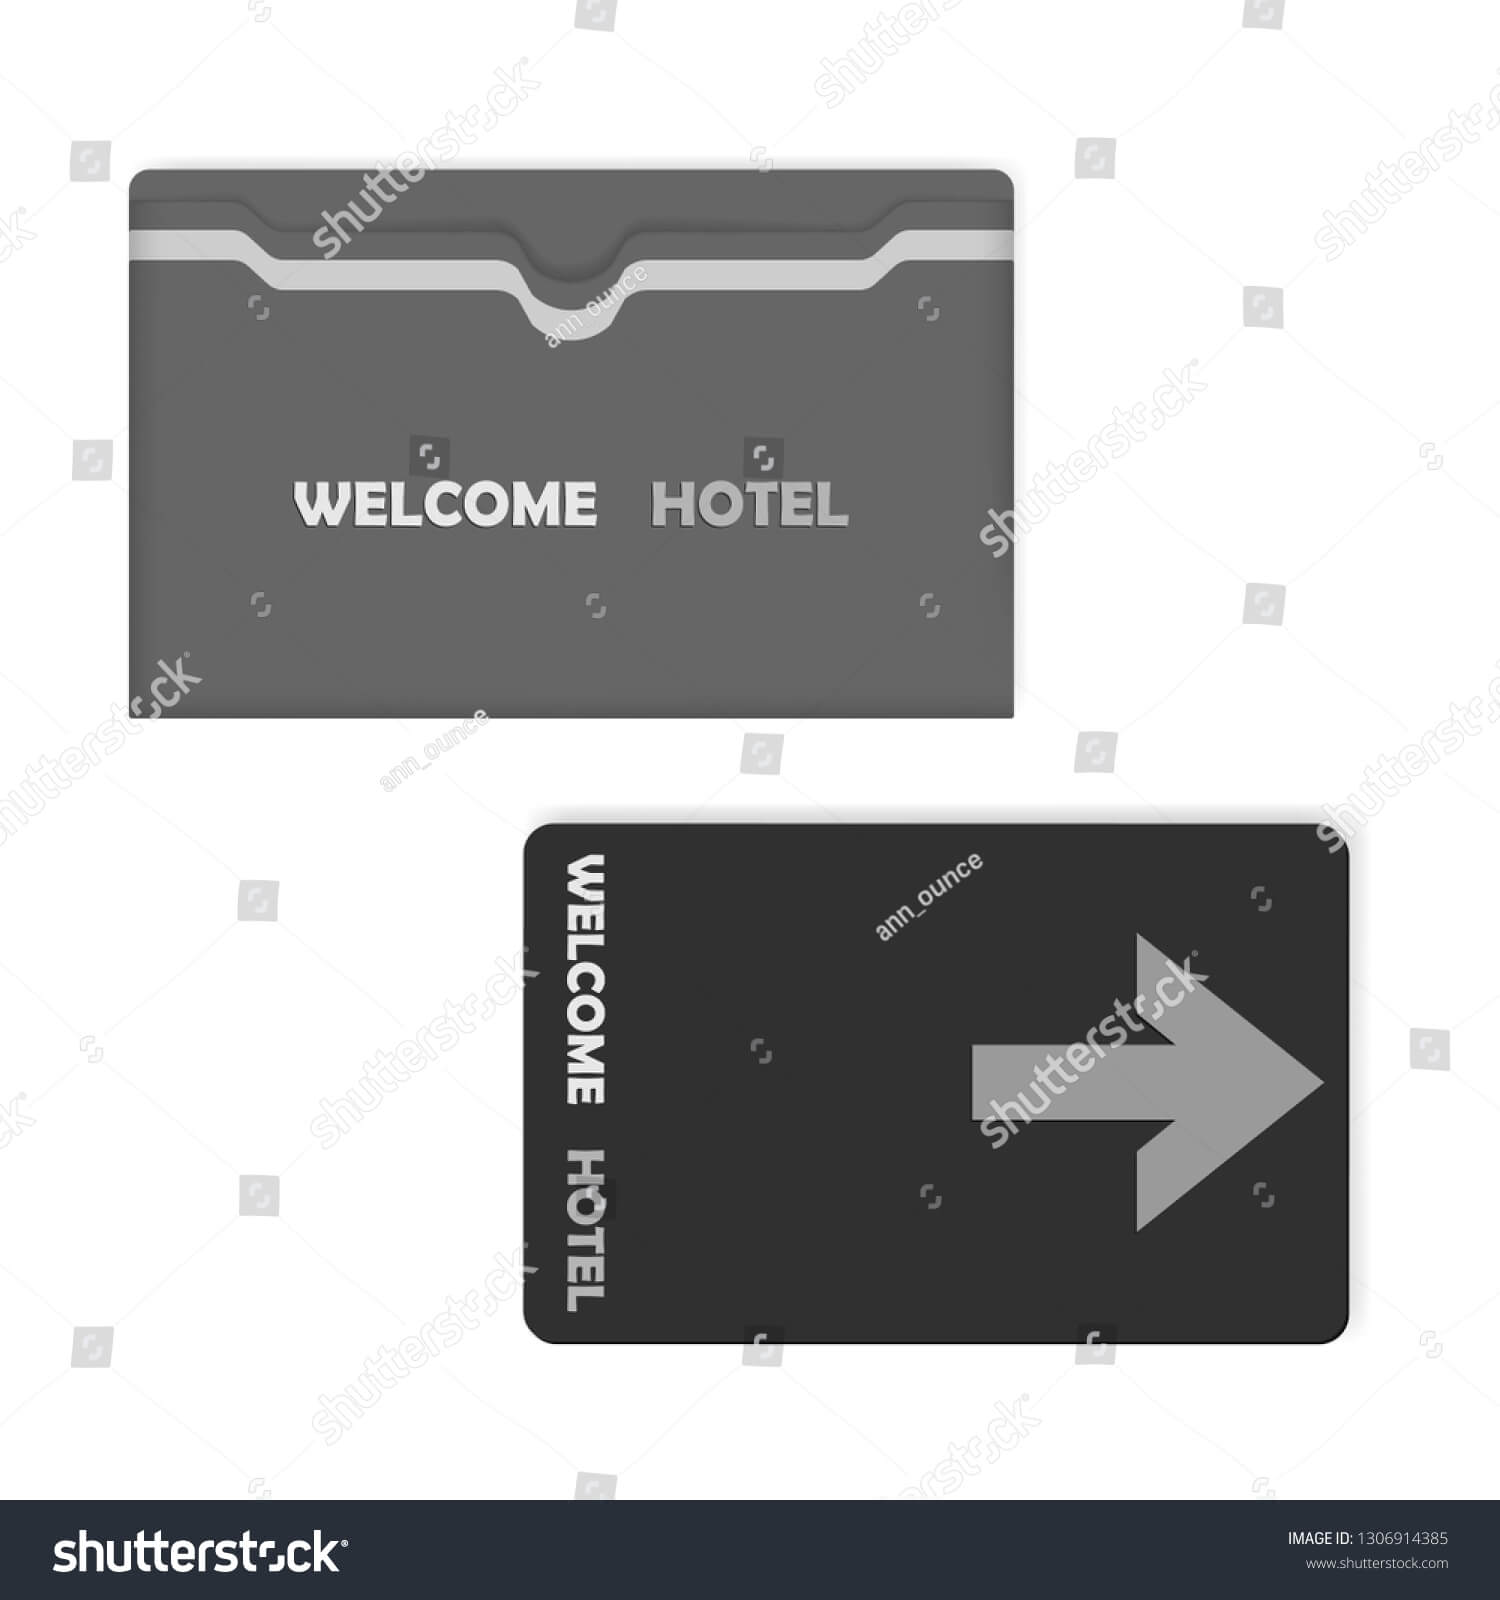 Стоковая Векторная Графика «Hotel Key Card Keycard Sleeve With Hotel Key Card Template